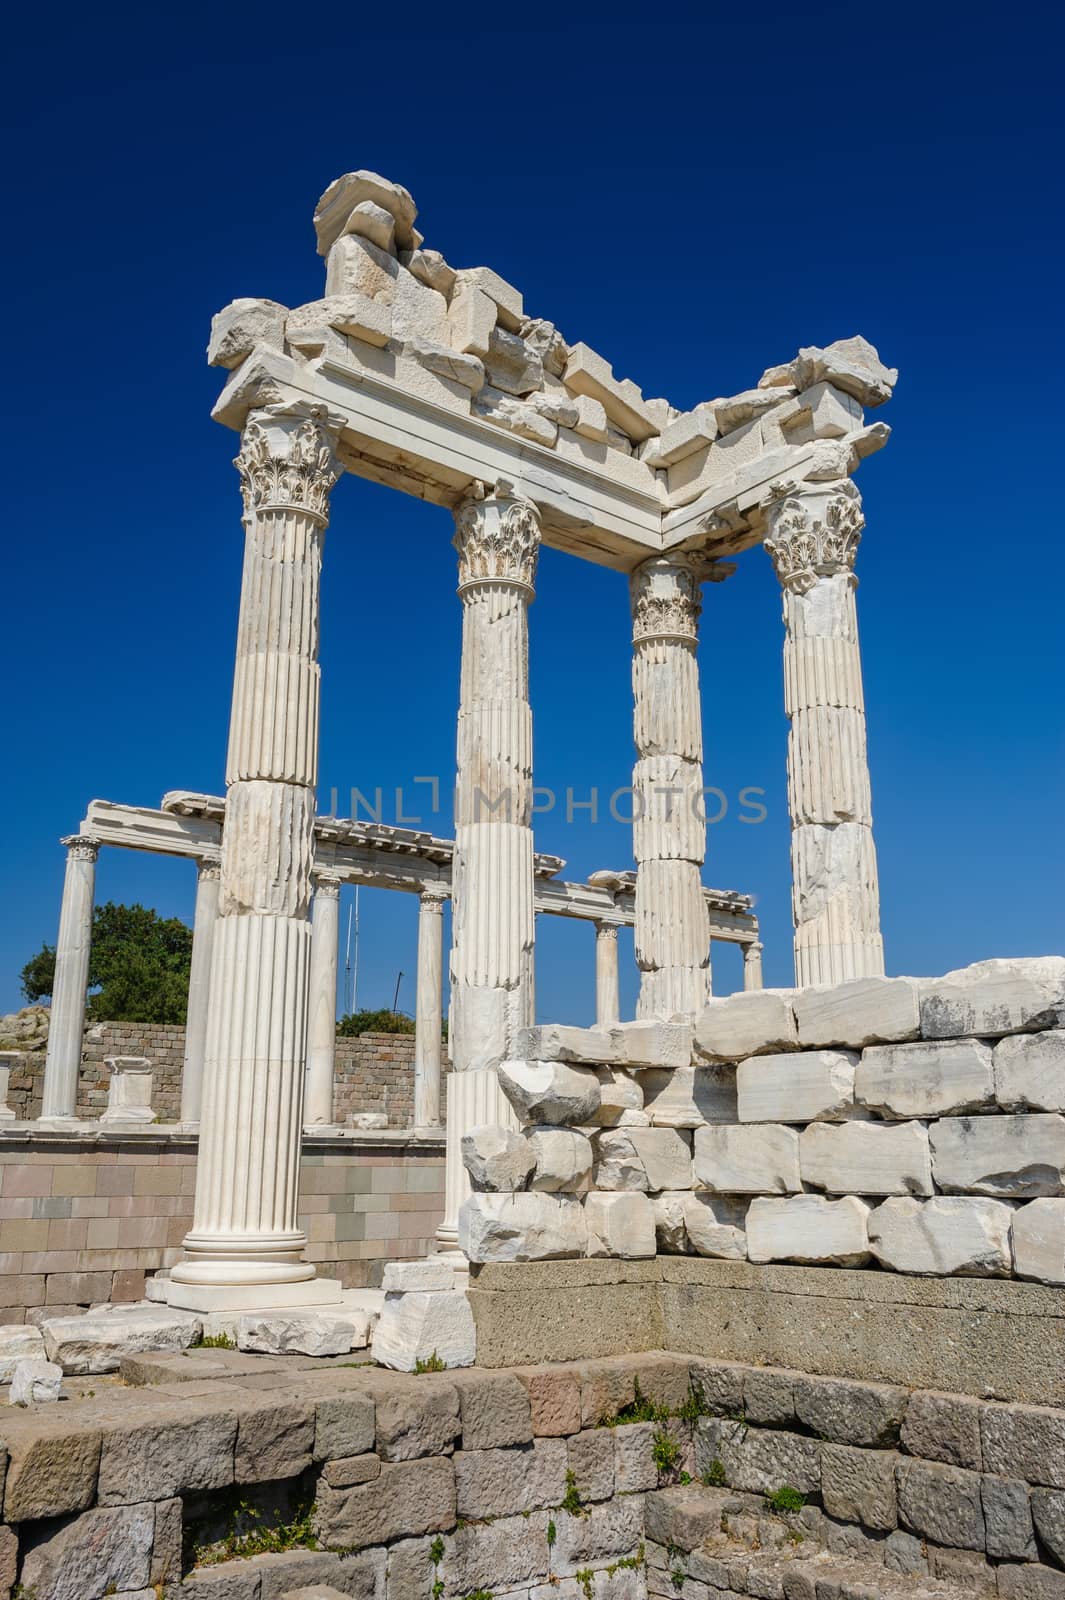 Temple of Trajan by starush